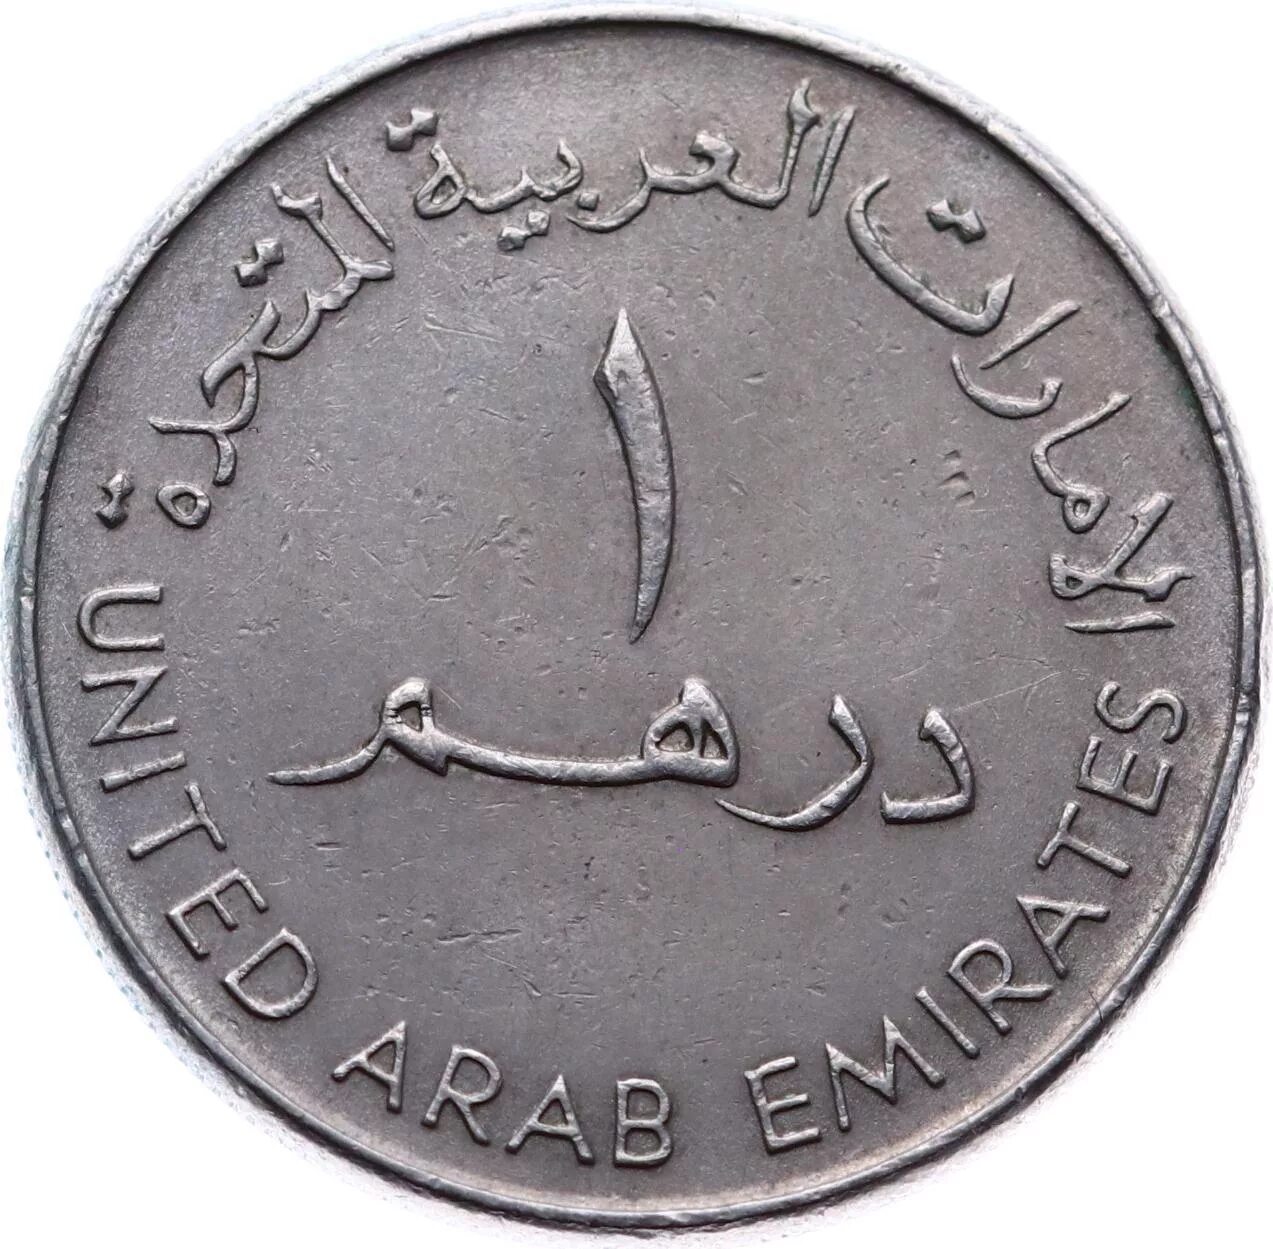 Uae 1. Монета United arab Emirates 2007 1428. Arab Emirates монета. United arab Emirates монета 1. Монета United arab Emirates 1993-1998.